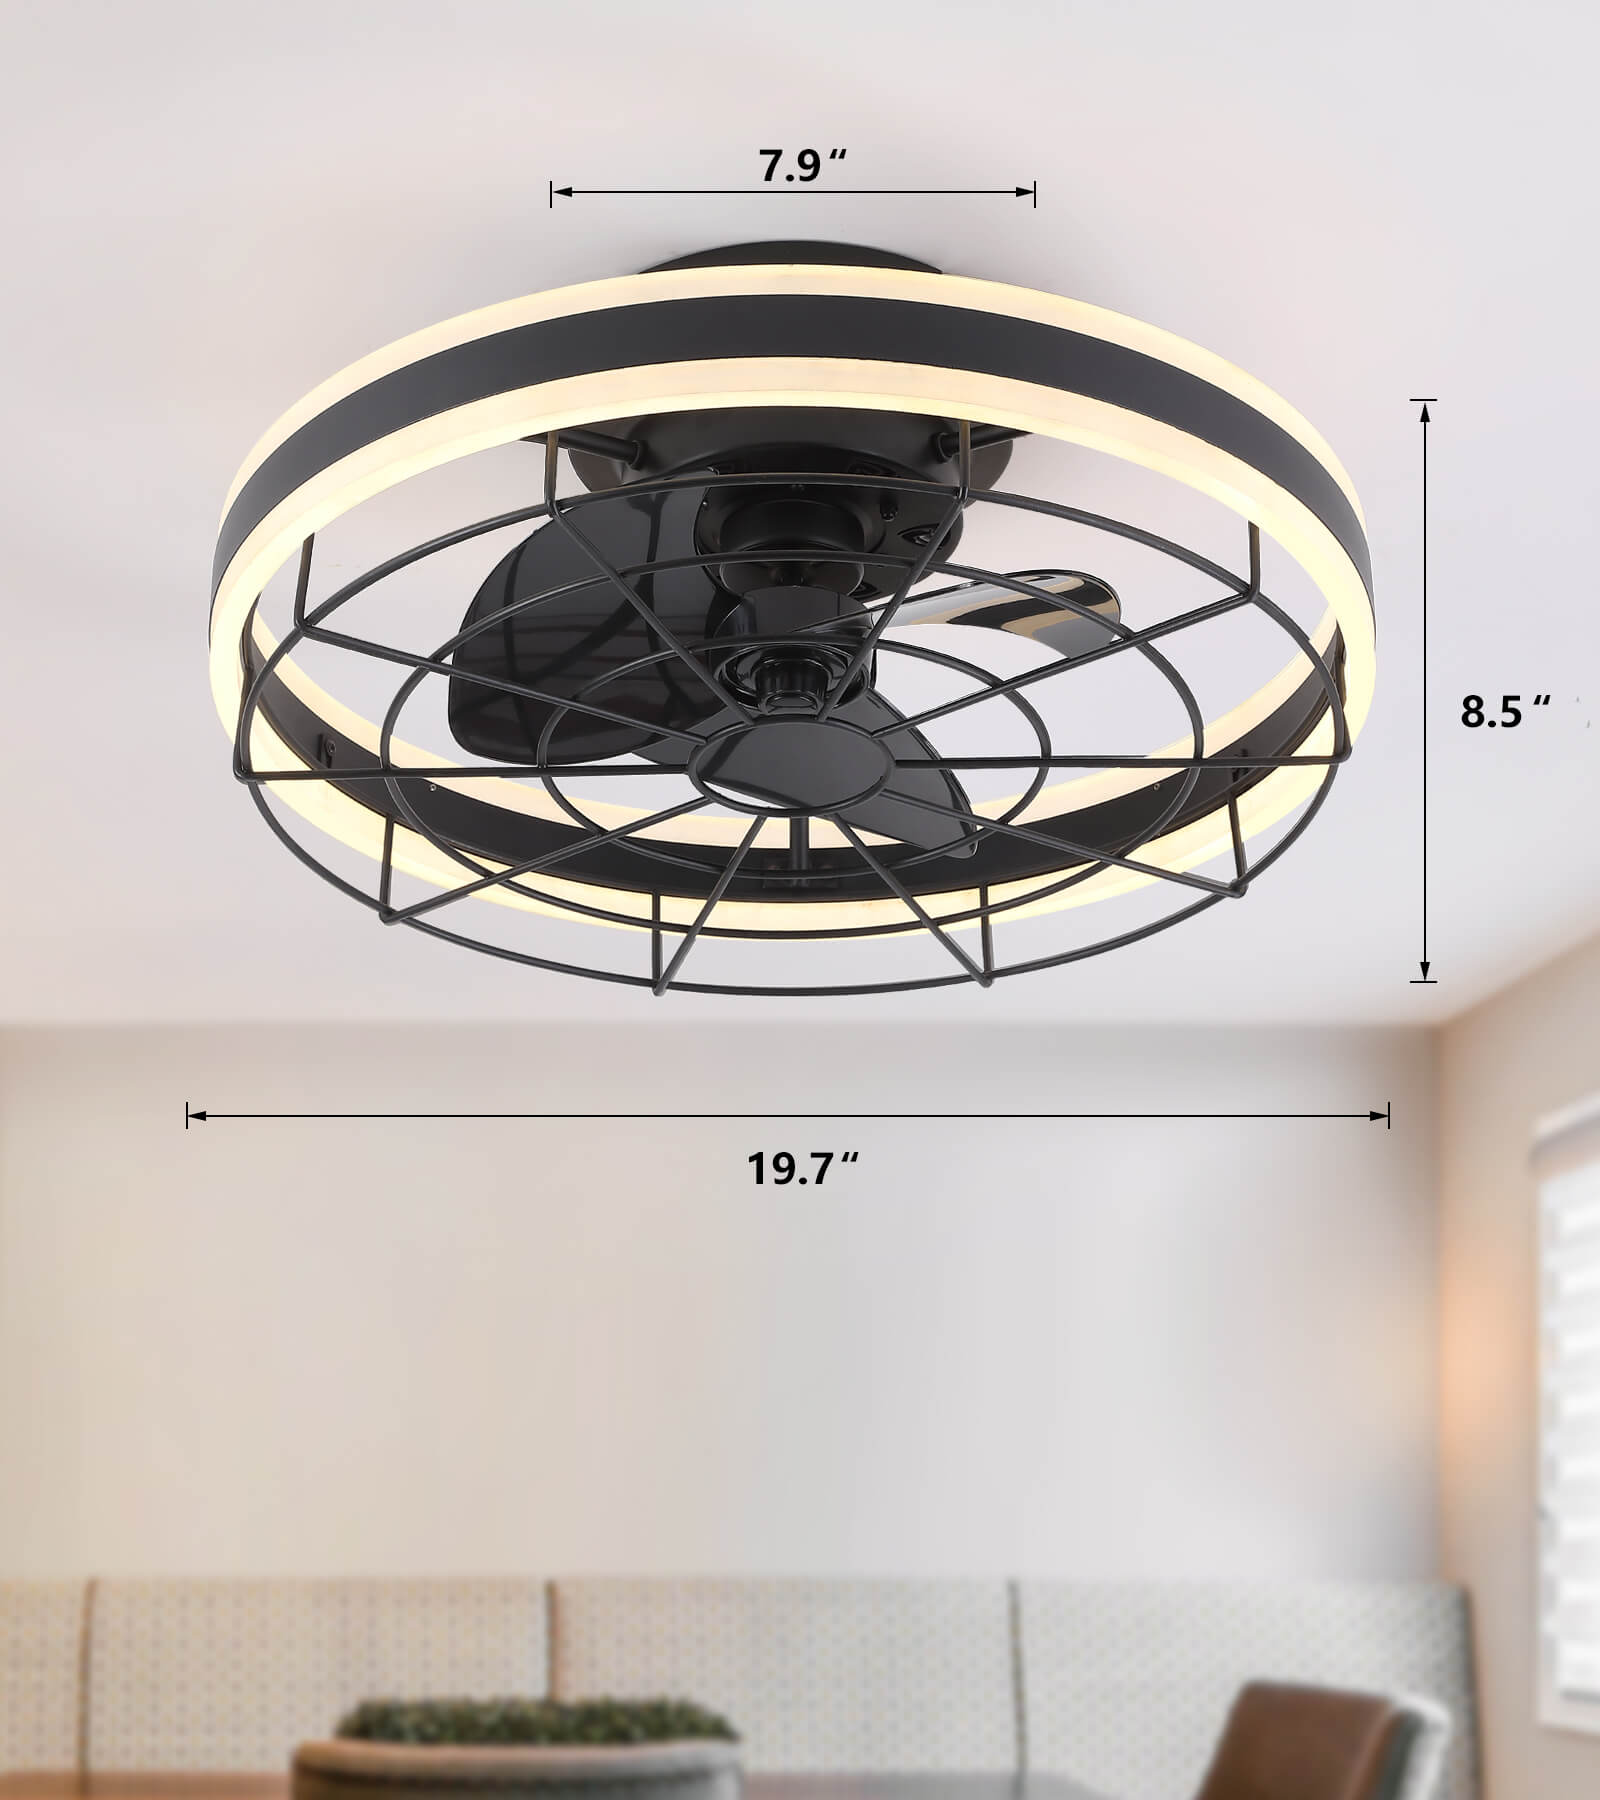 Flower LED Modern Flush Mount Ceiling Fan Lights with Remote